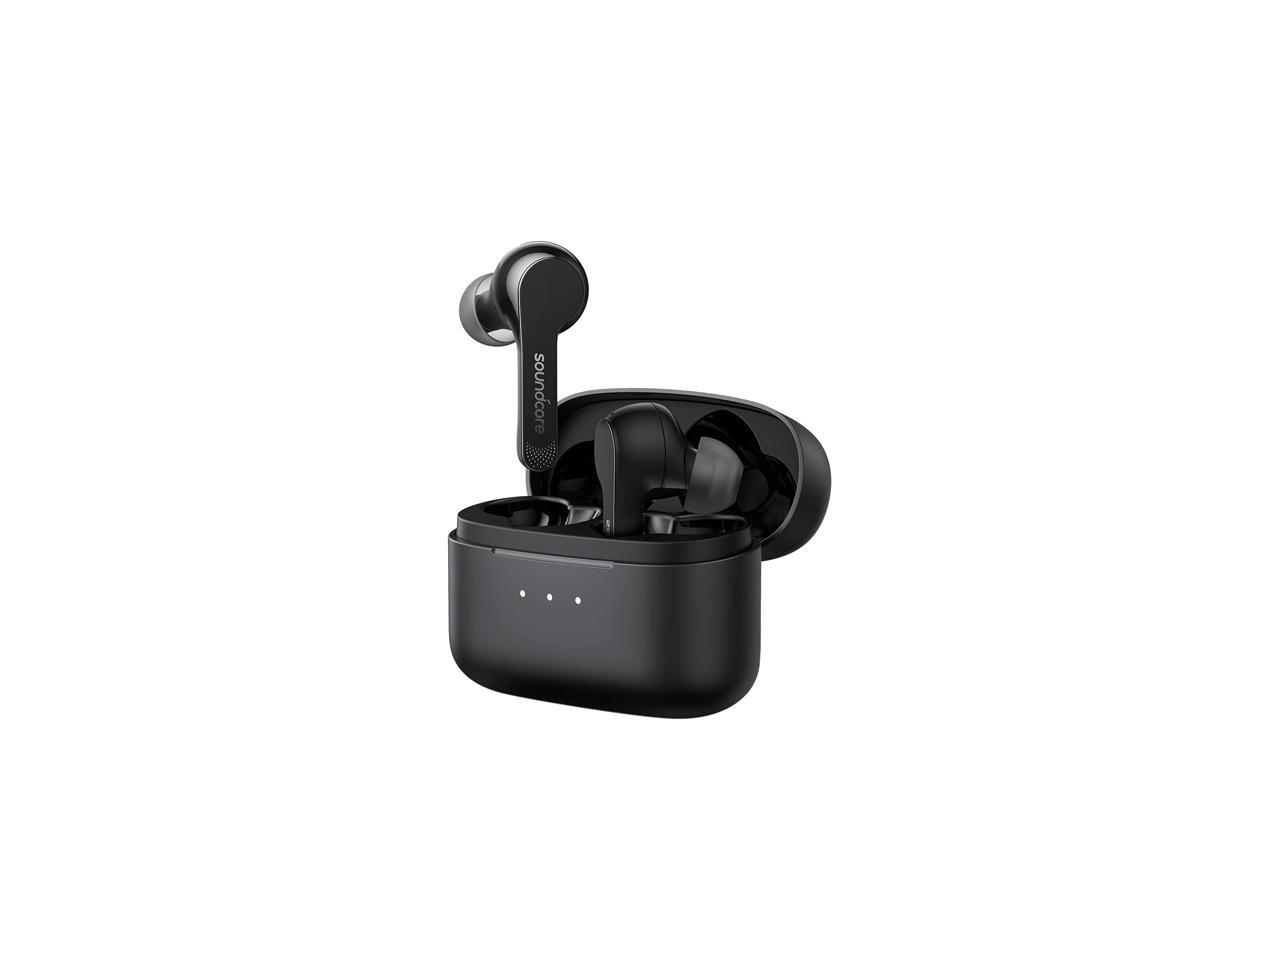 [2020 Upgrade] Anker Soundcore Liberty Air X True Wireless Earbuds $20